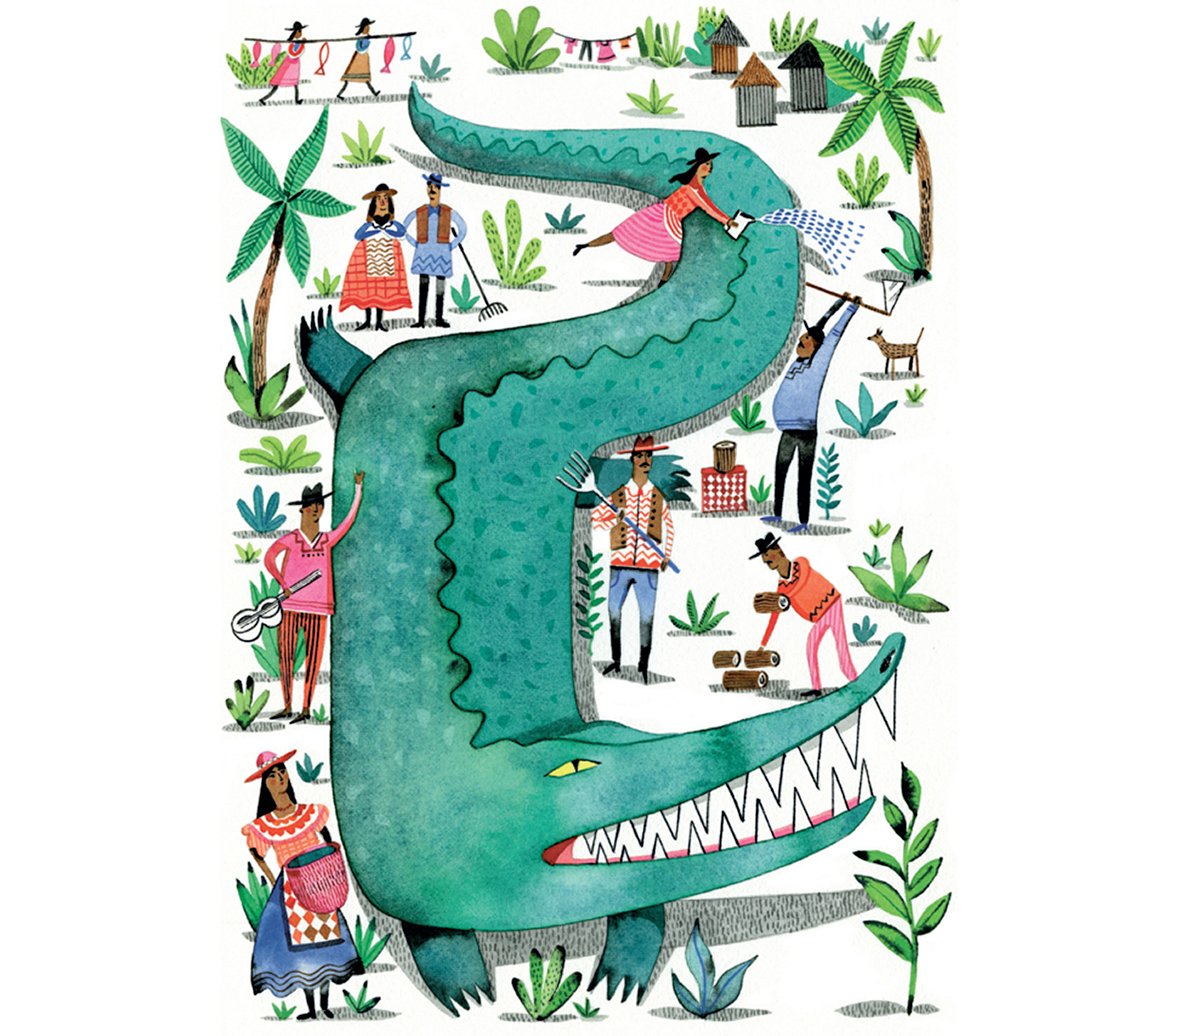 lydia-corry-giant-crocodile-illustration.jpg